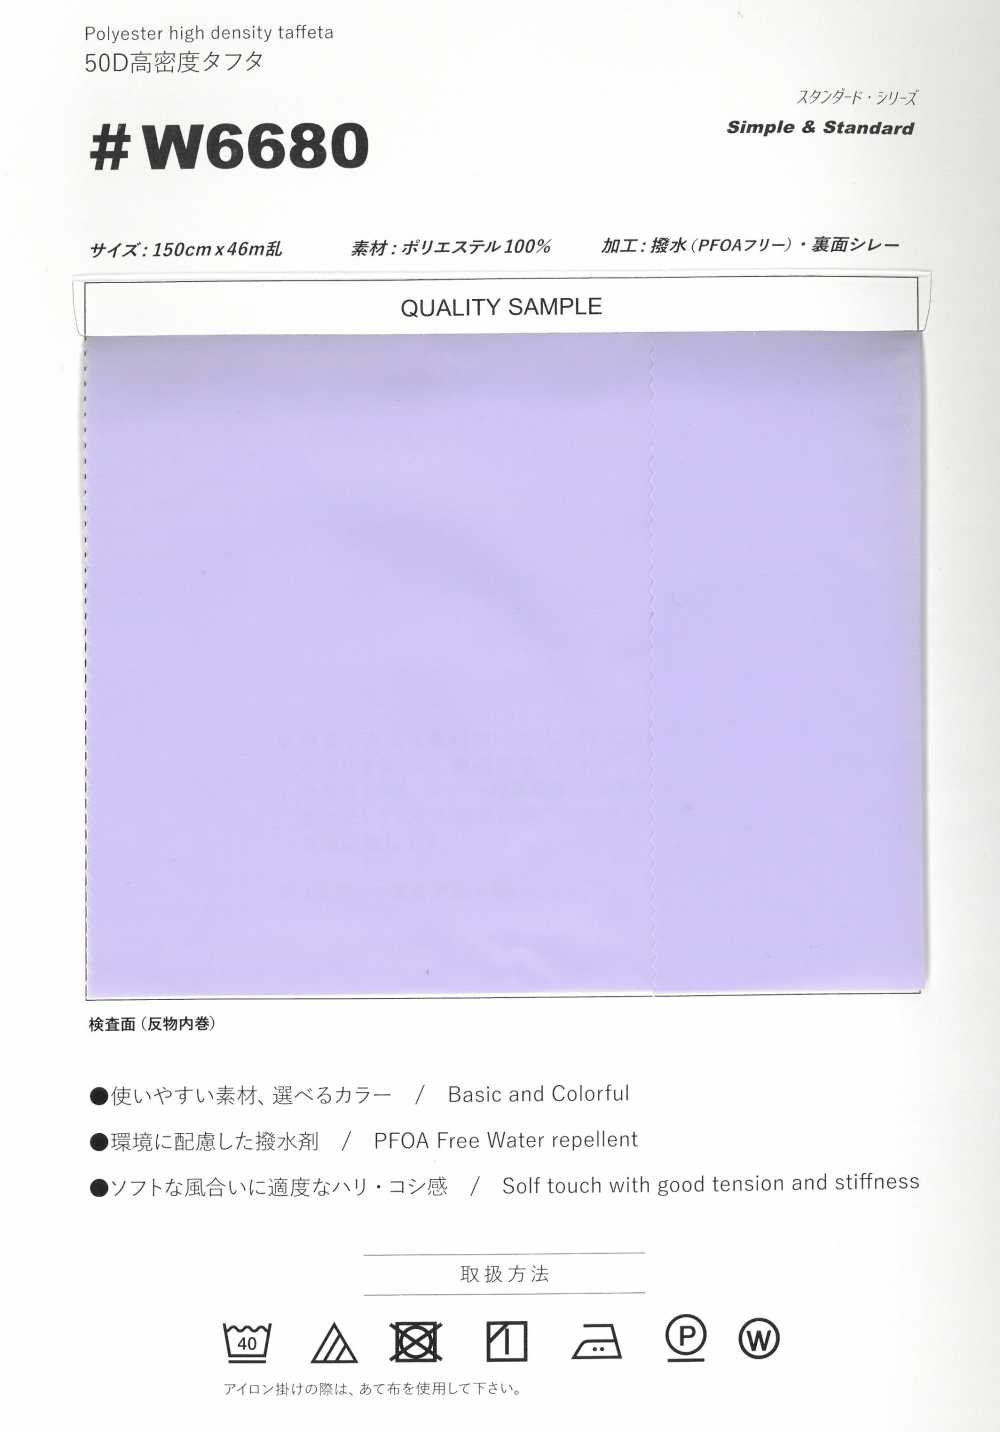 W6680 Lụa Taffeta Mật độ Cao 50D[Vải] Nishiyama